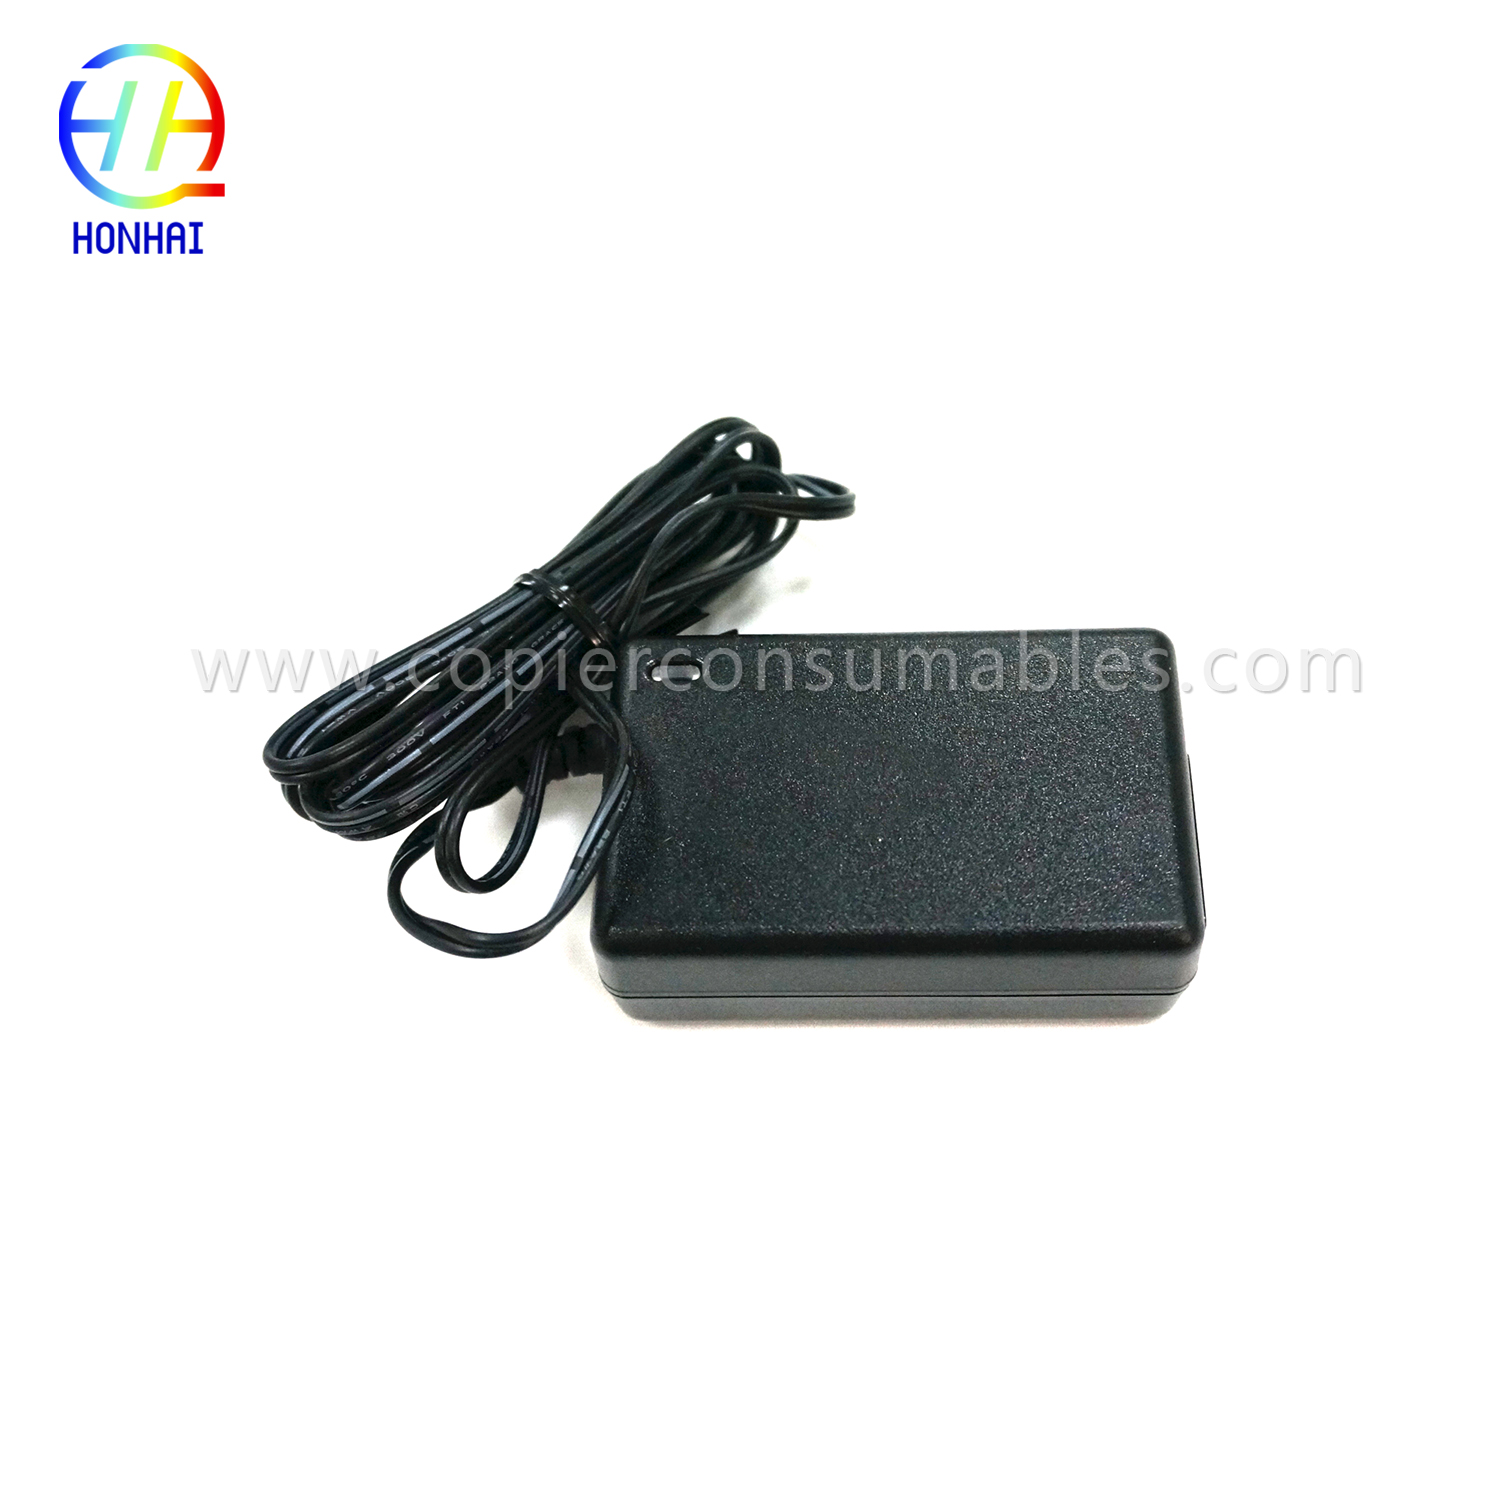 Factory Price Whiteboard Marker Ink - AC Power Adapter Charger for HP Deskjet 1000 1050 2000 2050 2060 2010 0957-2286 30V 333mA – HONHAI